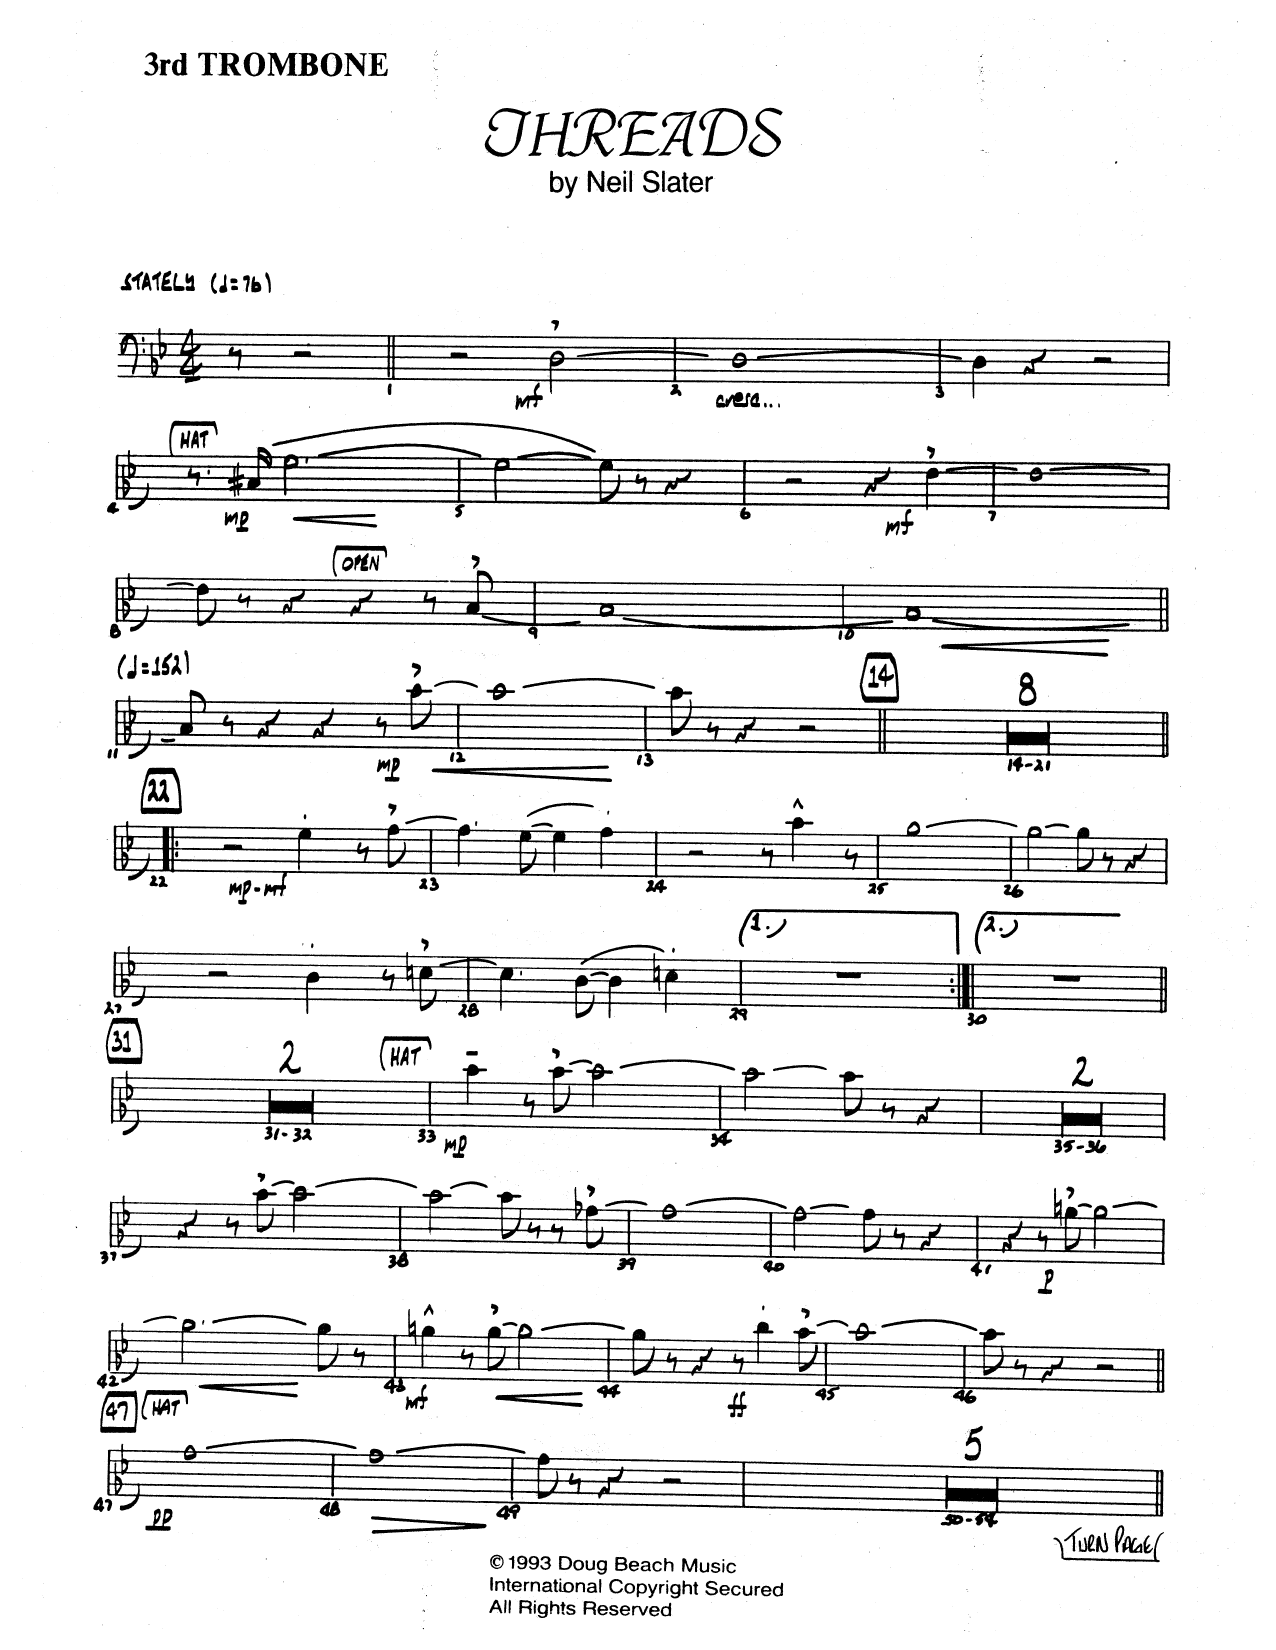 Download Neil Slater Threads - 3rd Trombone Sheet Music